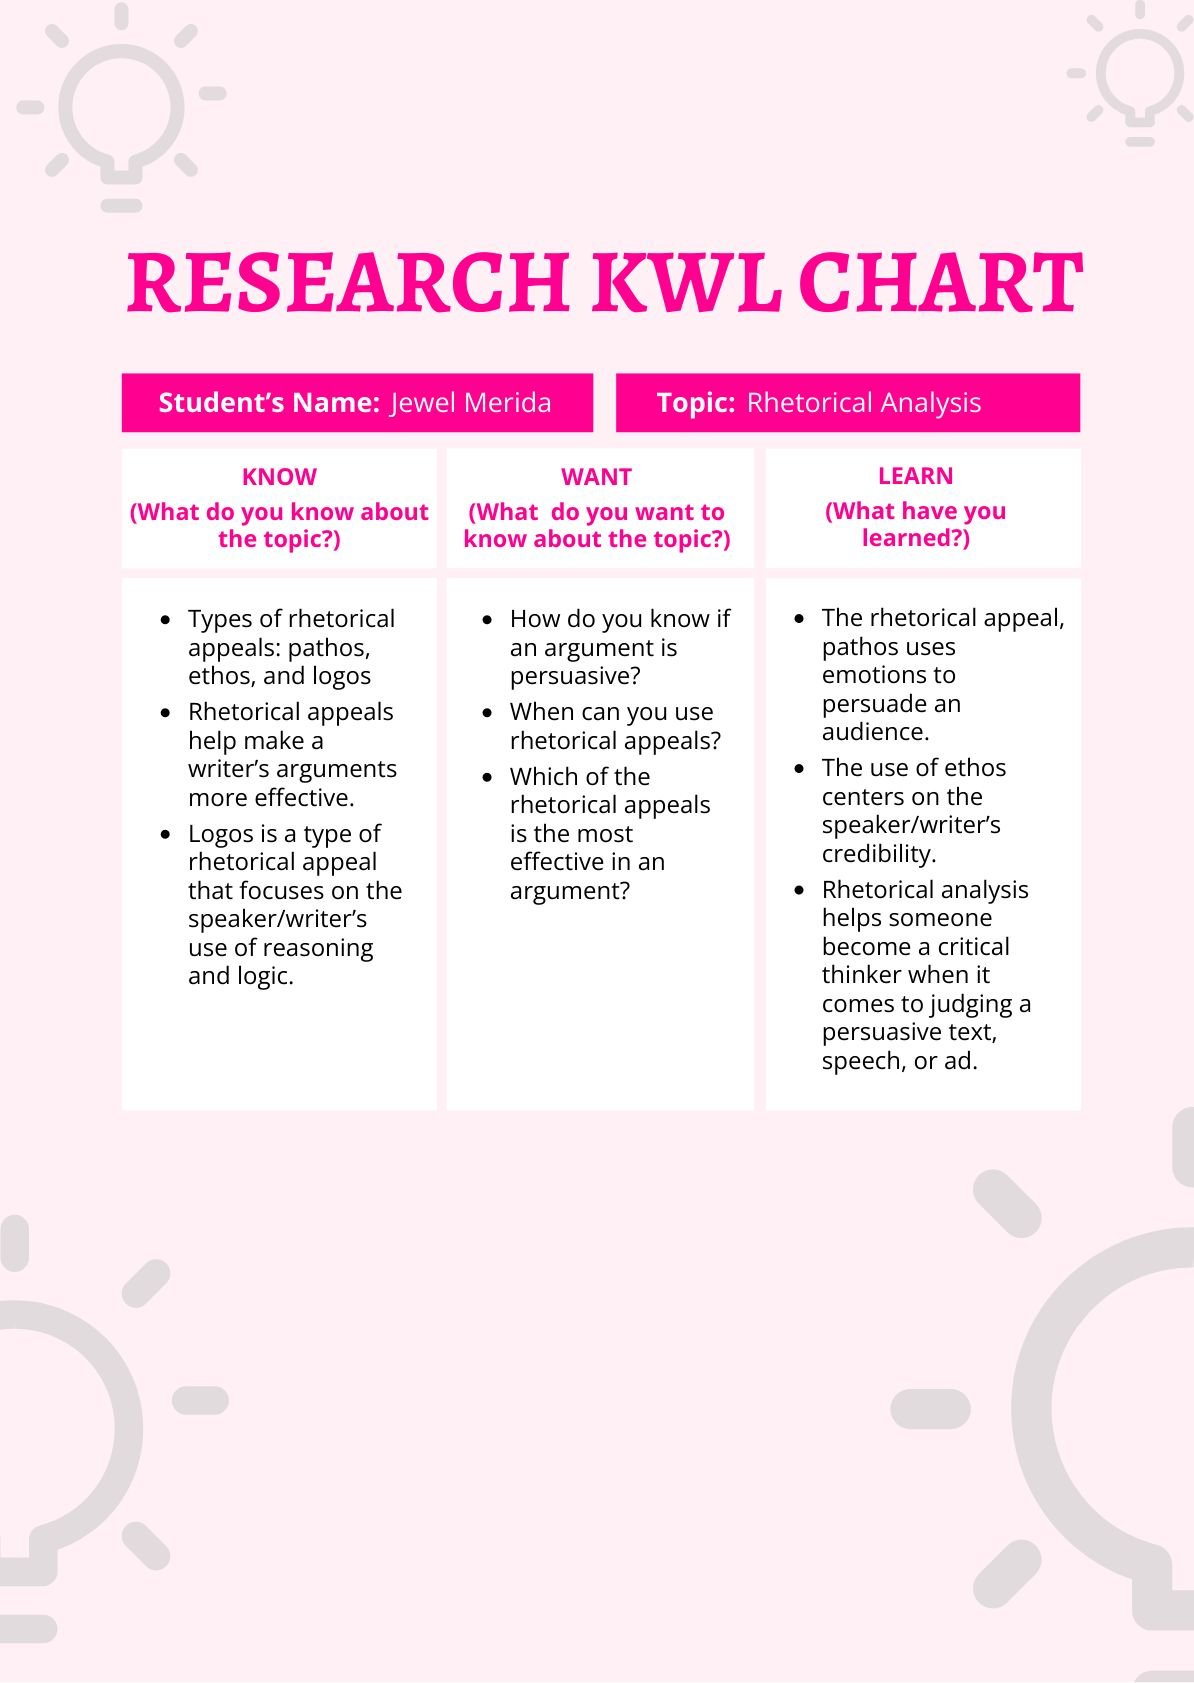 Research KWL Chart